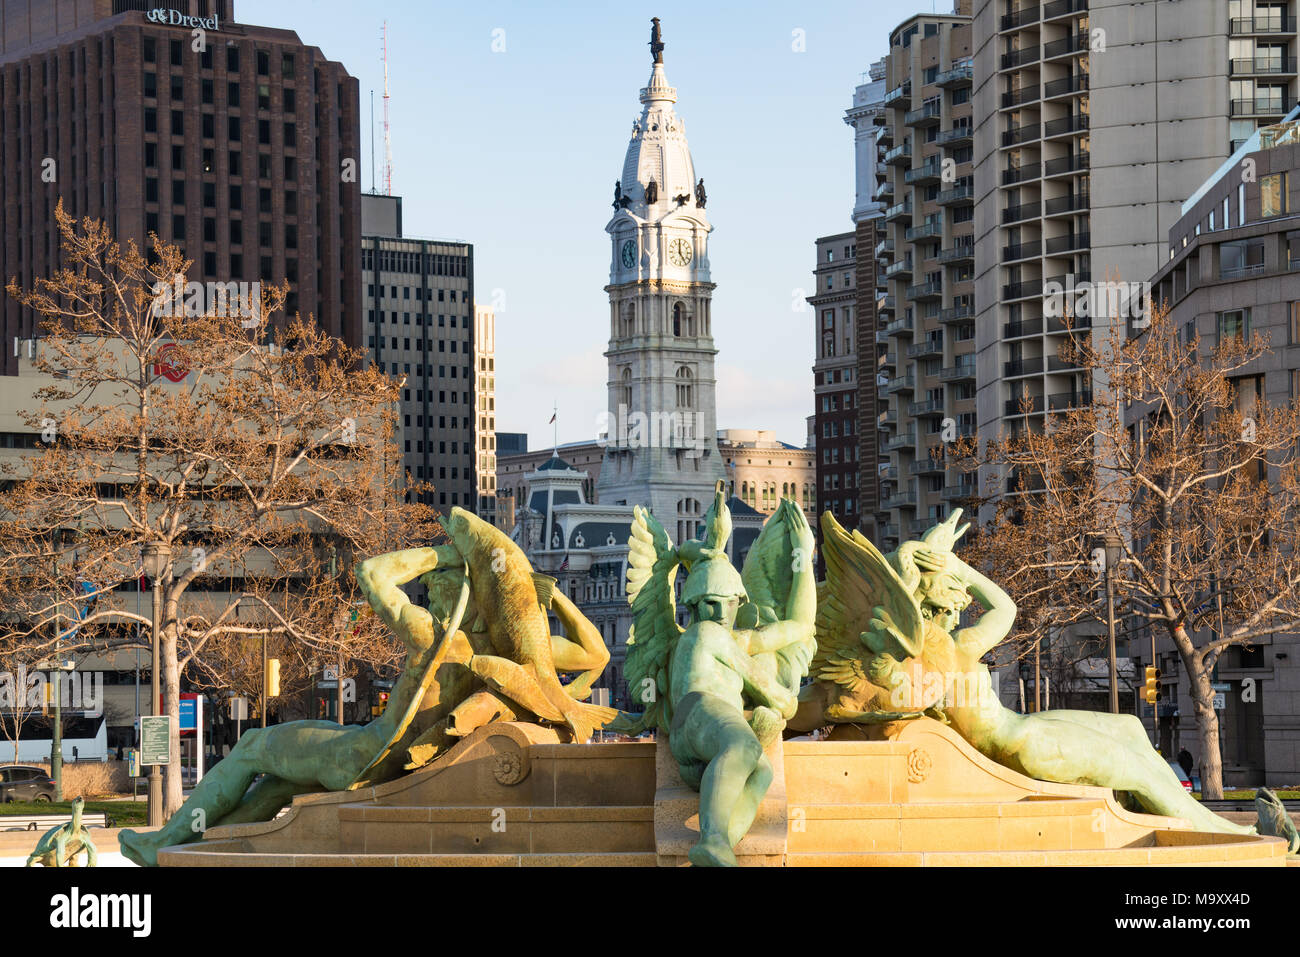 PHILADELPHIA, PA - MARCH 10, 2018: Historic City Hall building in downtown Philadelphia, Pennsylvania Stock Photo